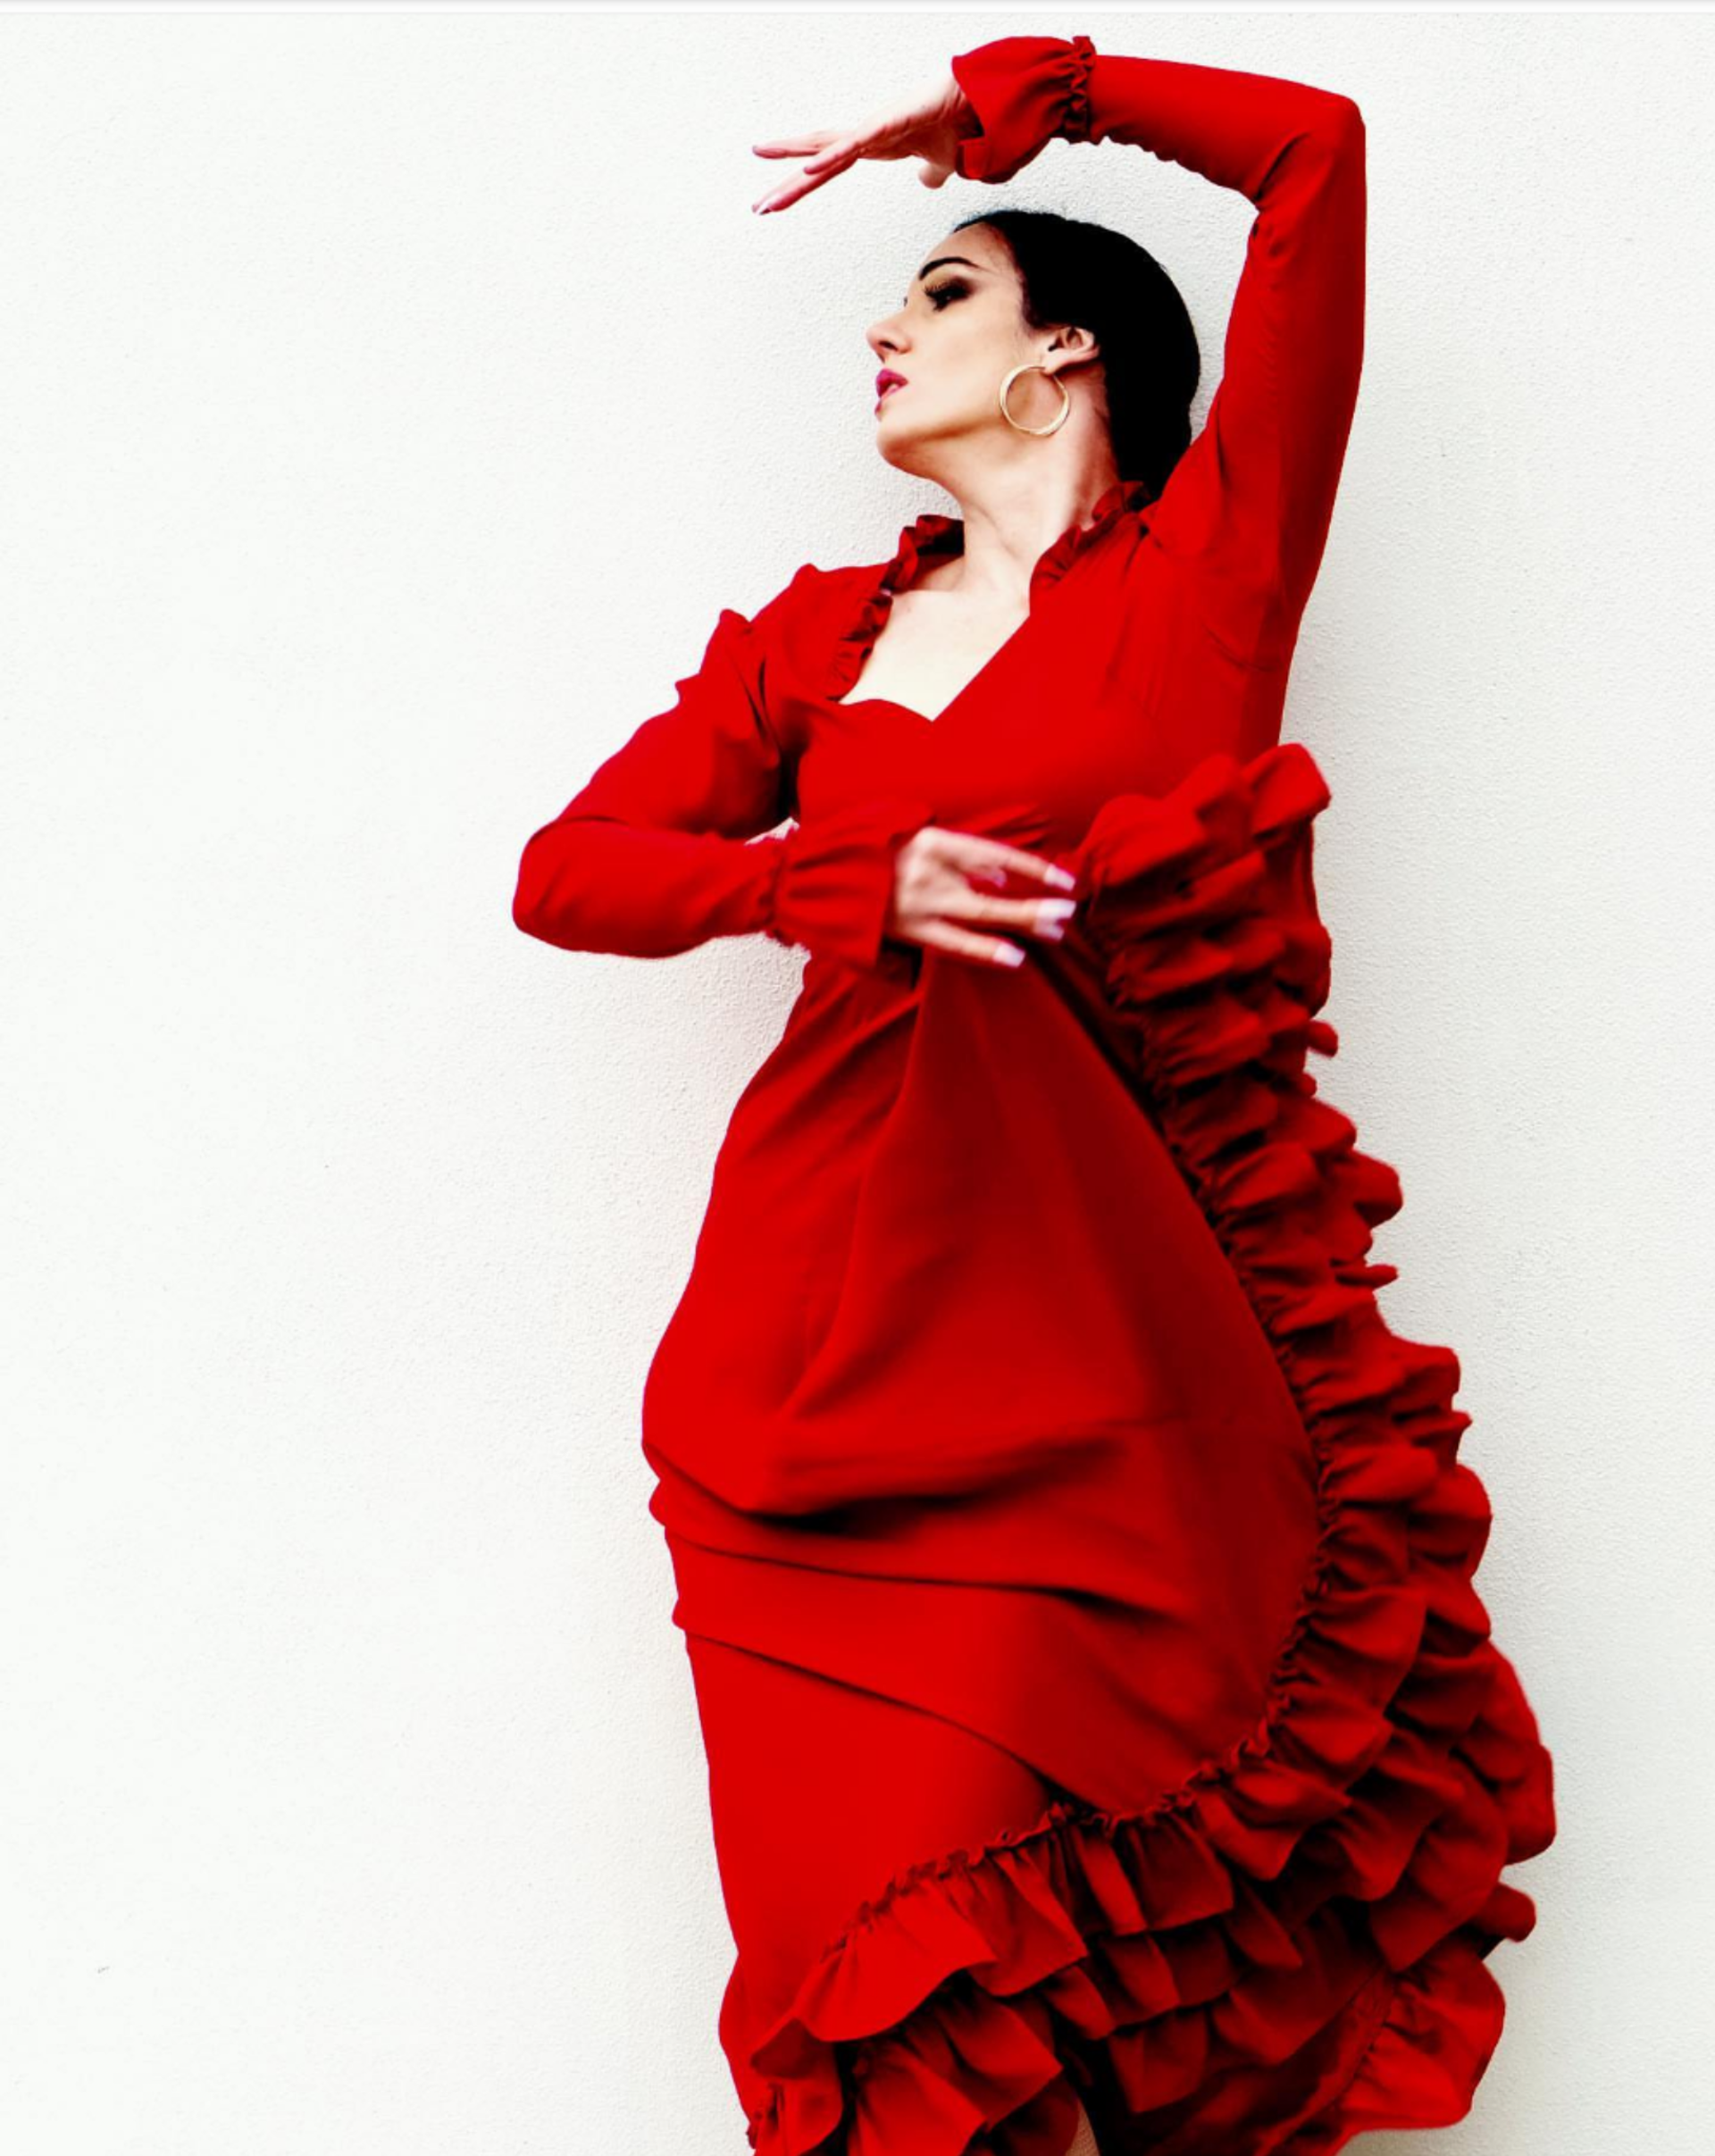 Flamenco Performance - March 23rd  by Savannah Fuentes